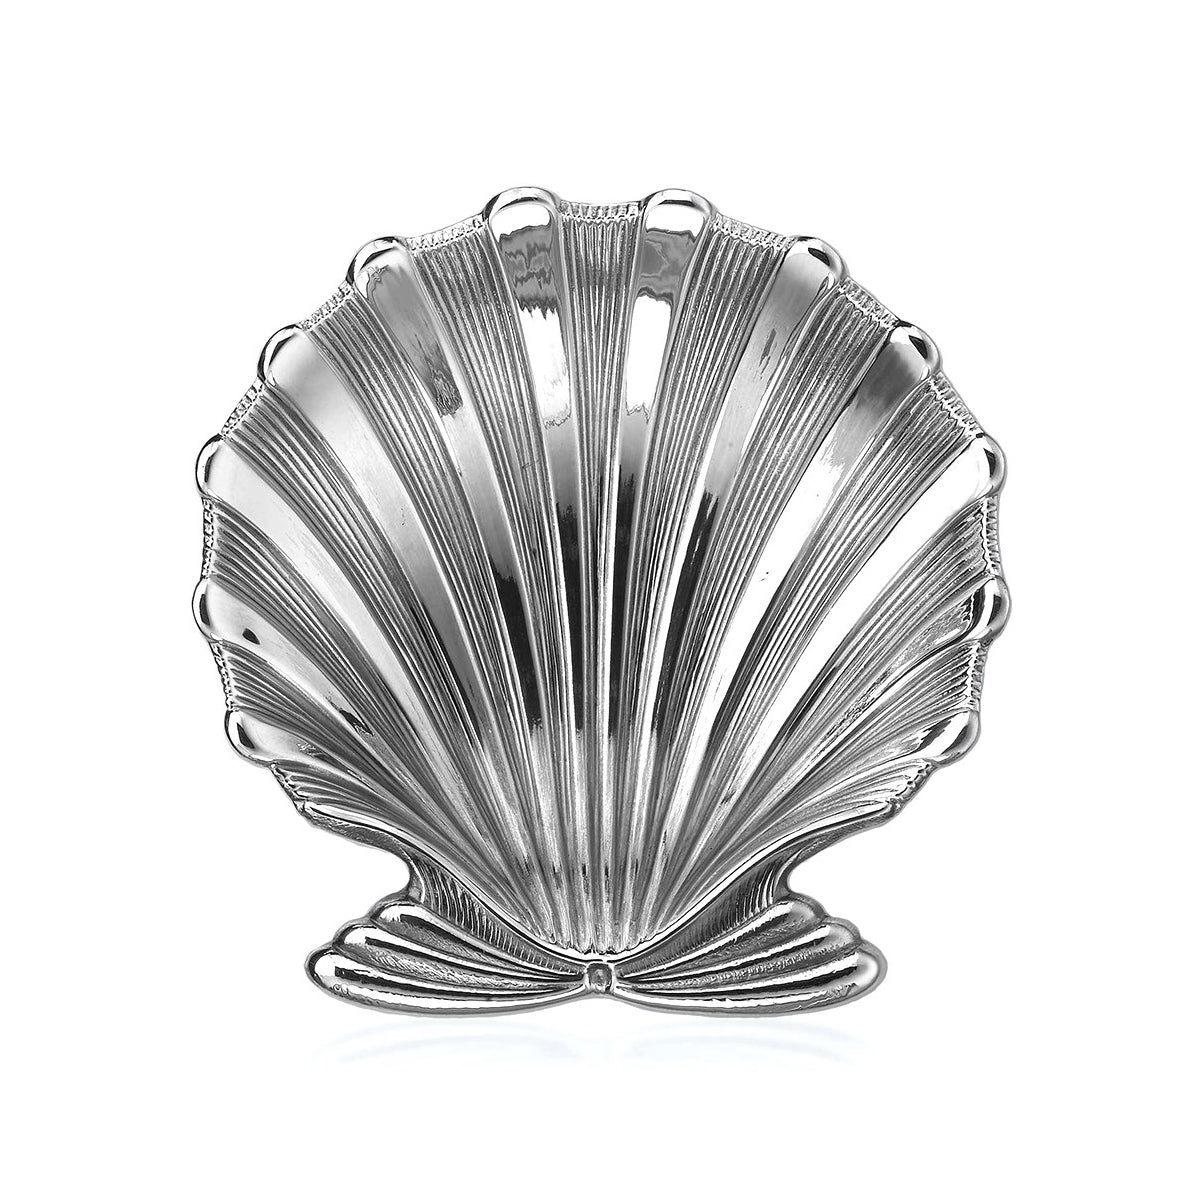 Buccellati Silver - Small Silver Chlamys Shell Dish